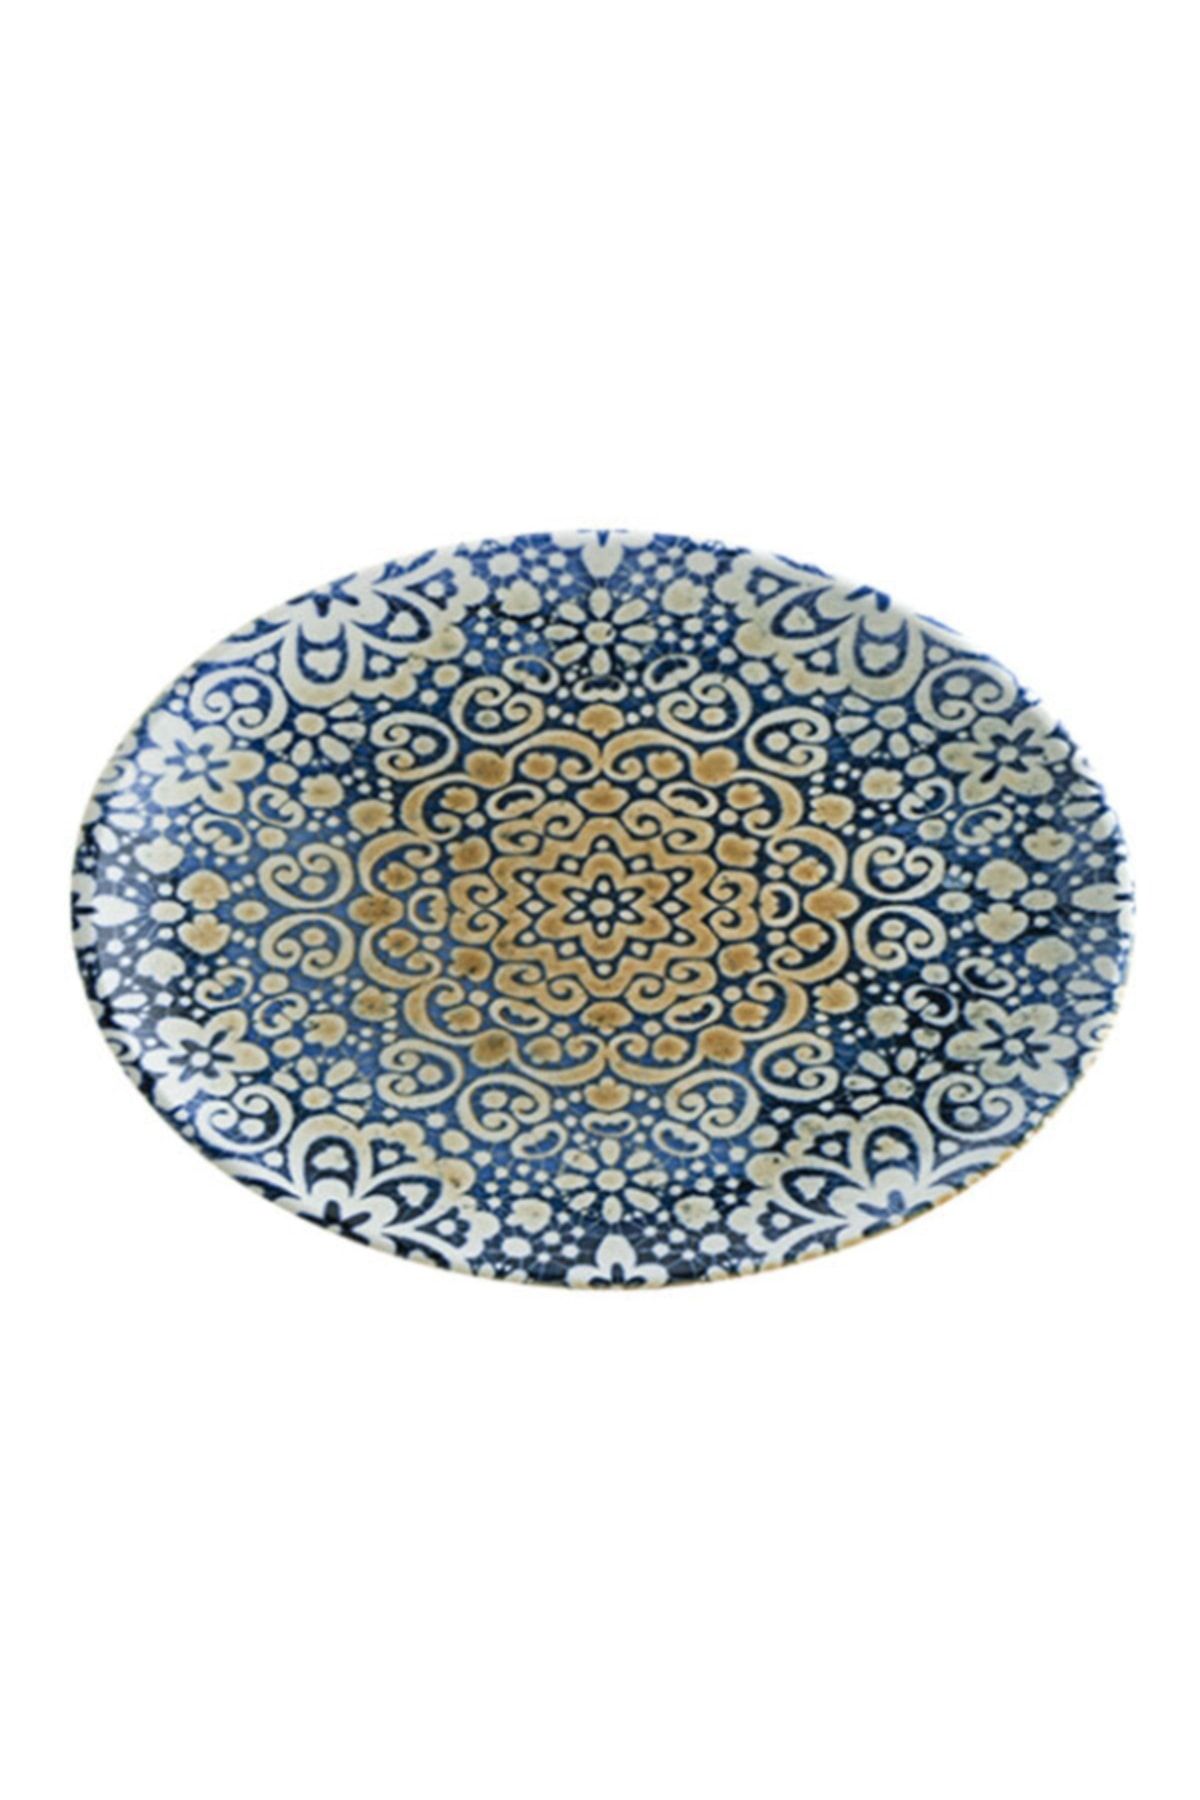 Bonna Porselen Alhambra Oval Servis Tabağı 31 X 24 Cm (2'li)